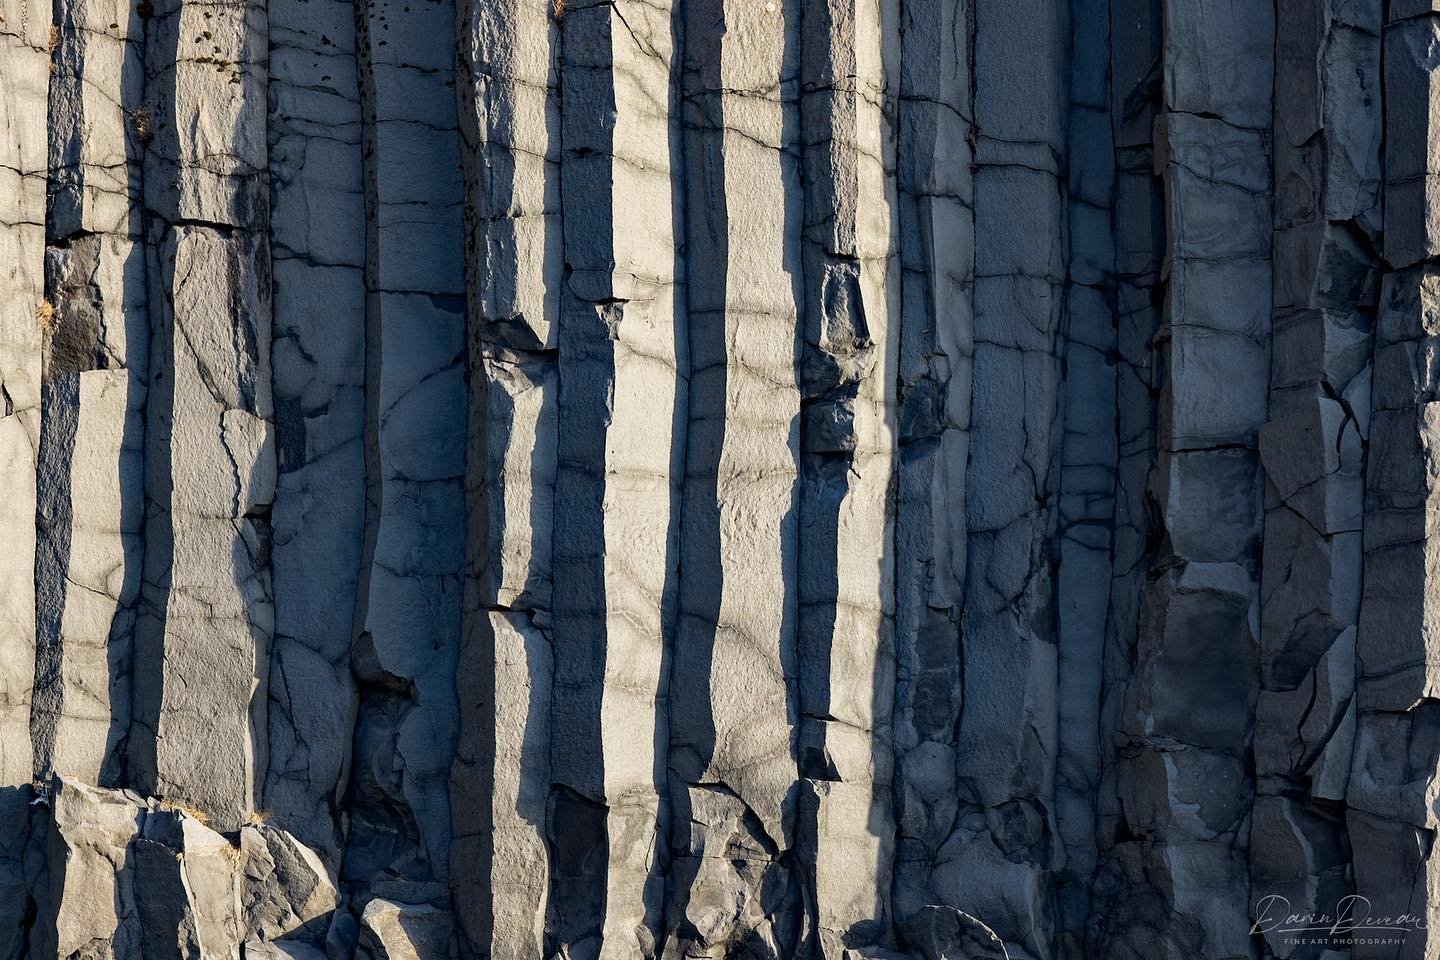 Rugged basalt pillars on Iceland&rsquo;s southern coast. 
.
.
.
.
#iceland #icelandtrip #icelandphotography #icelandphoto #icelandphotographer #naturephotography #landscapephotography #fineartphotography #fineartphotographer @natgeo @natgeoyourshot #